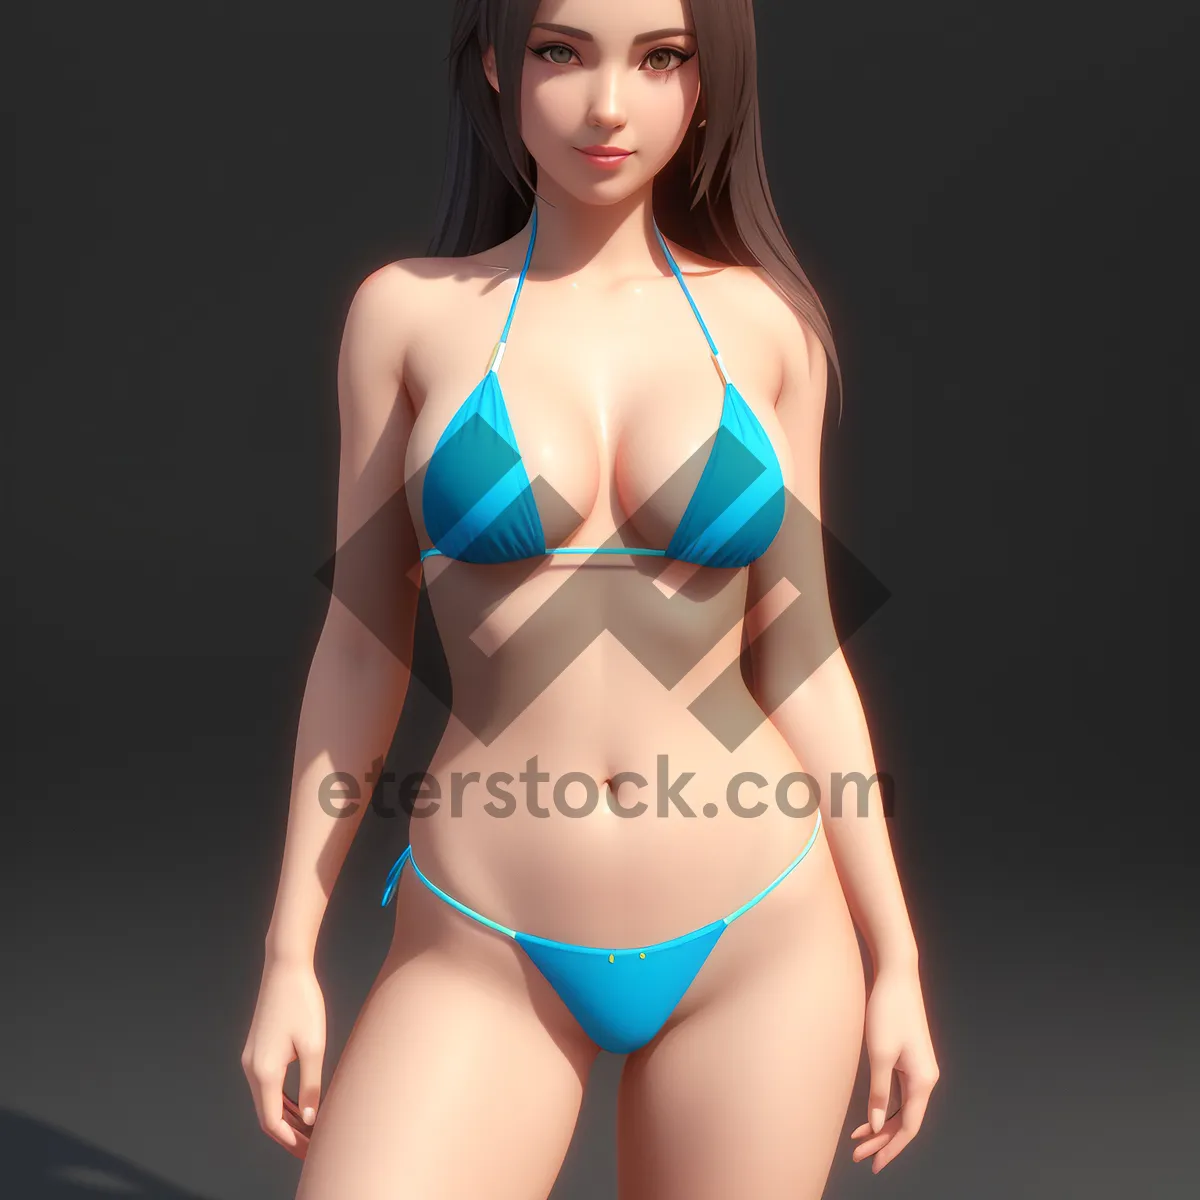 Picture of Stunning Bikini Model with Seductive Charm